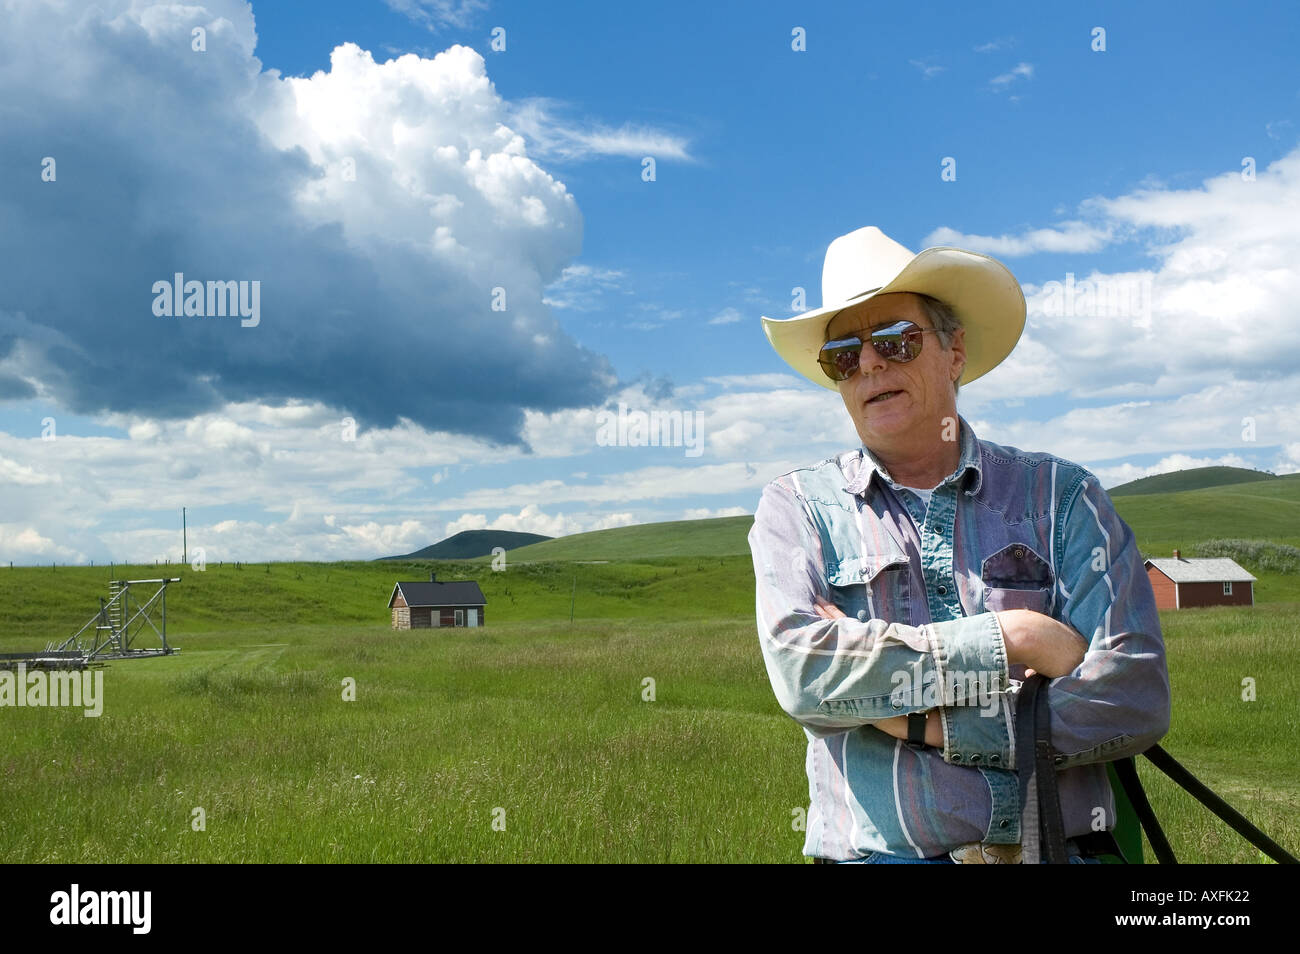 Ein Rancher in der Bar U Ranch National Historic Site in Southern Alberta Kanada Stockfoto